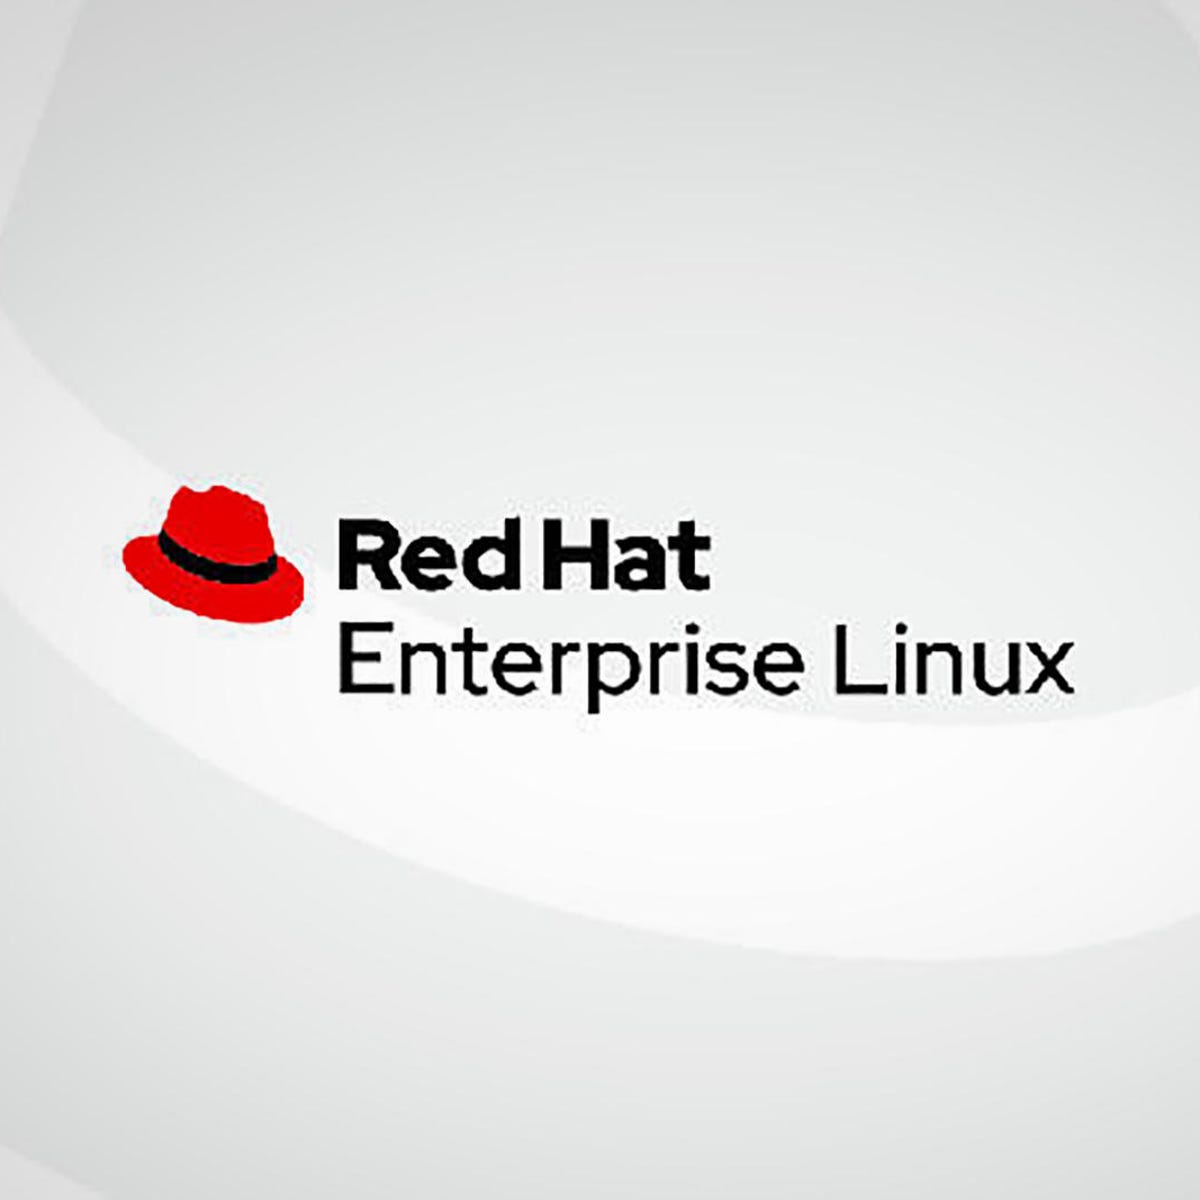 Red hat 2. Red hat Enterprise Linux 8. Red hat Enterprise Linux. Red hat Enterprise Linux логотип. Red hat Enterprise Linux 7.